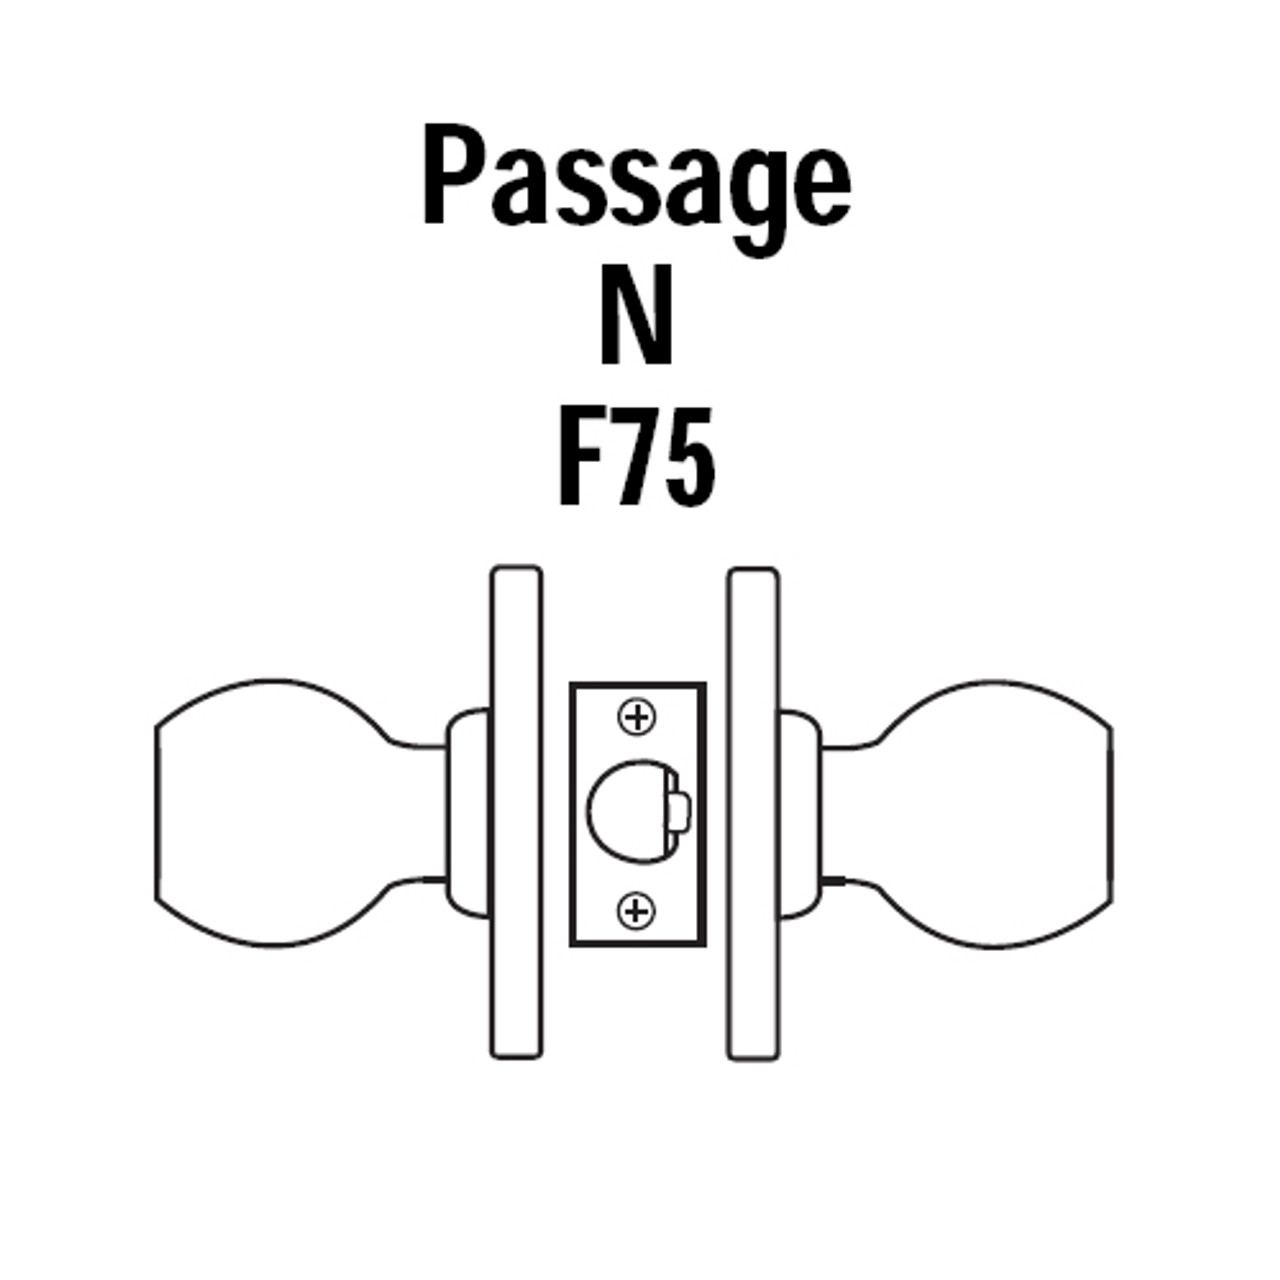 8K30N4CSTK626 Best 8K Series Passage Heavy Duty Cylindrical Knob Locks with Round Style in Satin Chrome